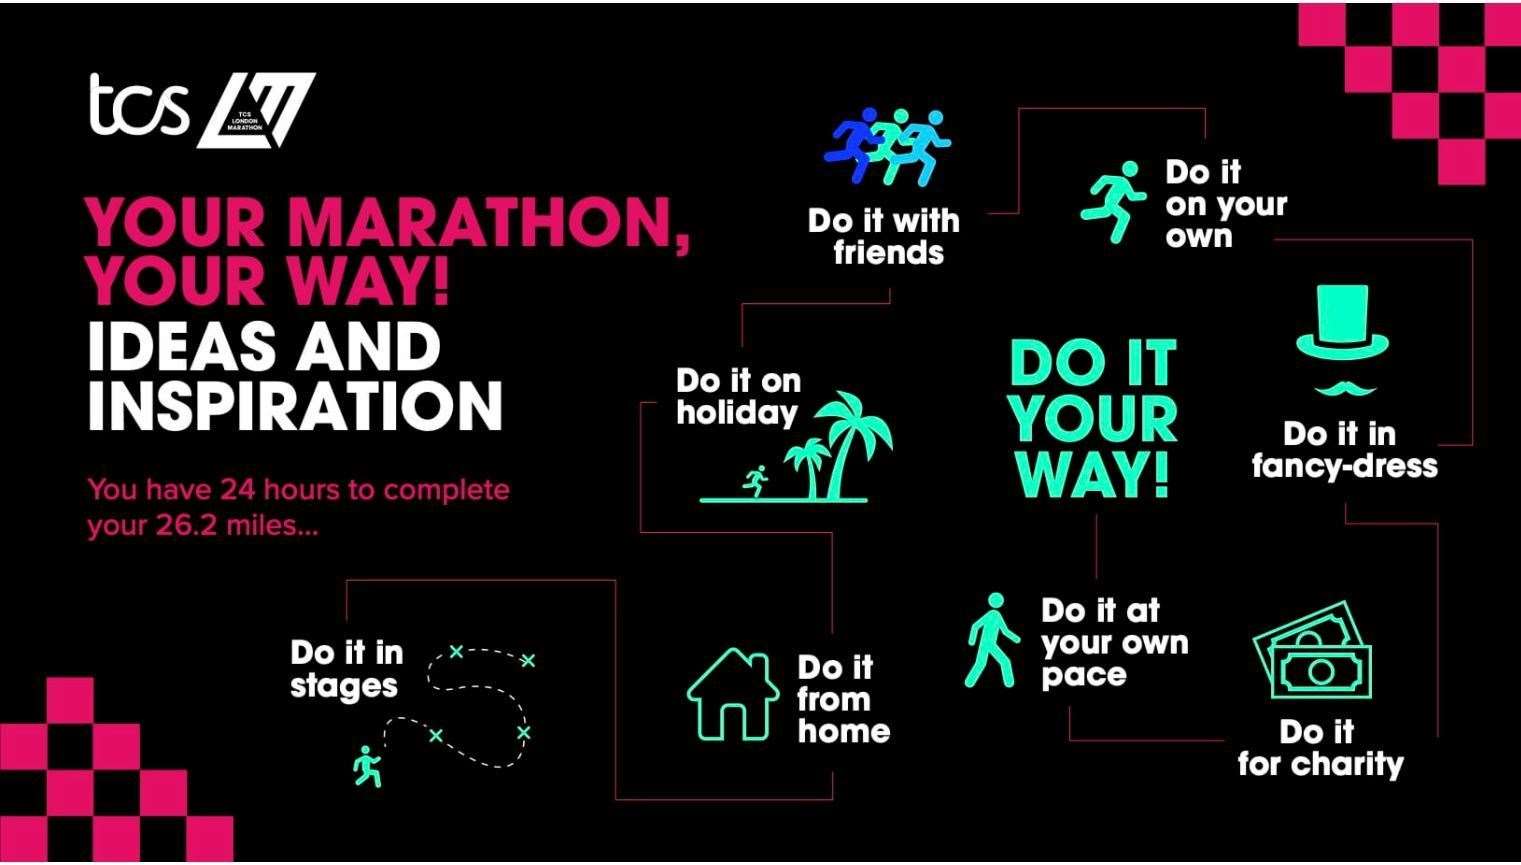 TCS Virtual London Marathon poster says "do it your way"